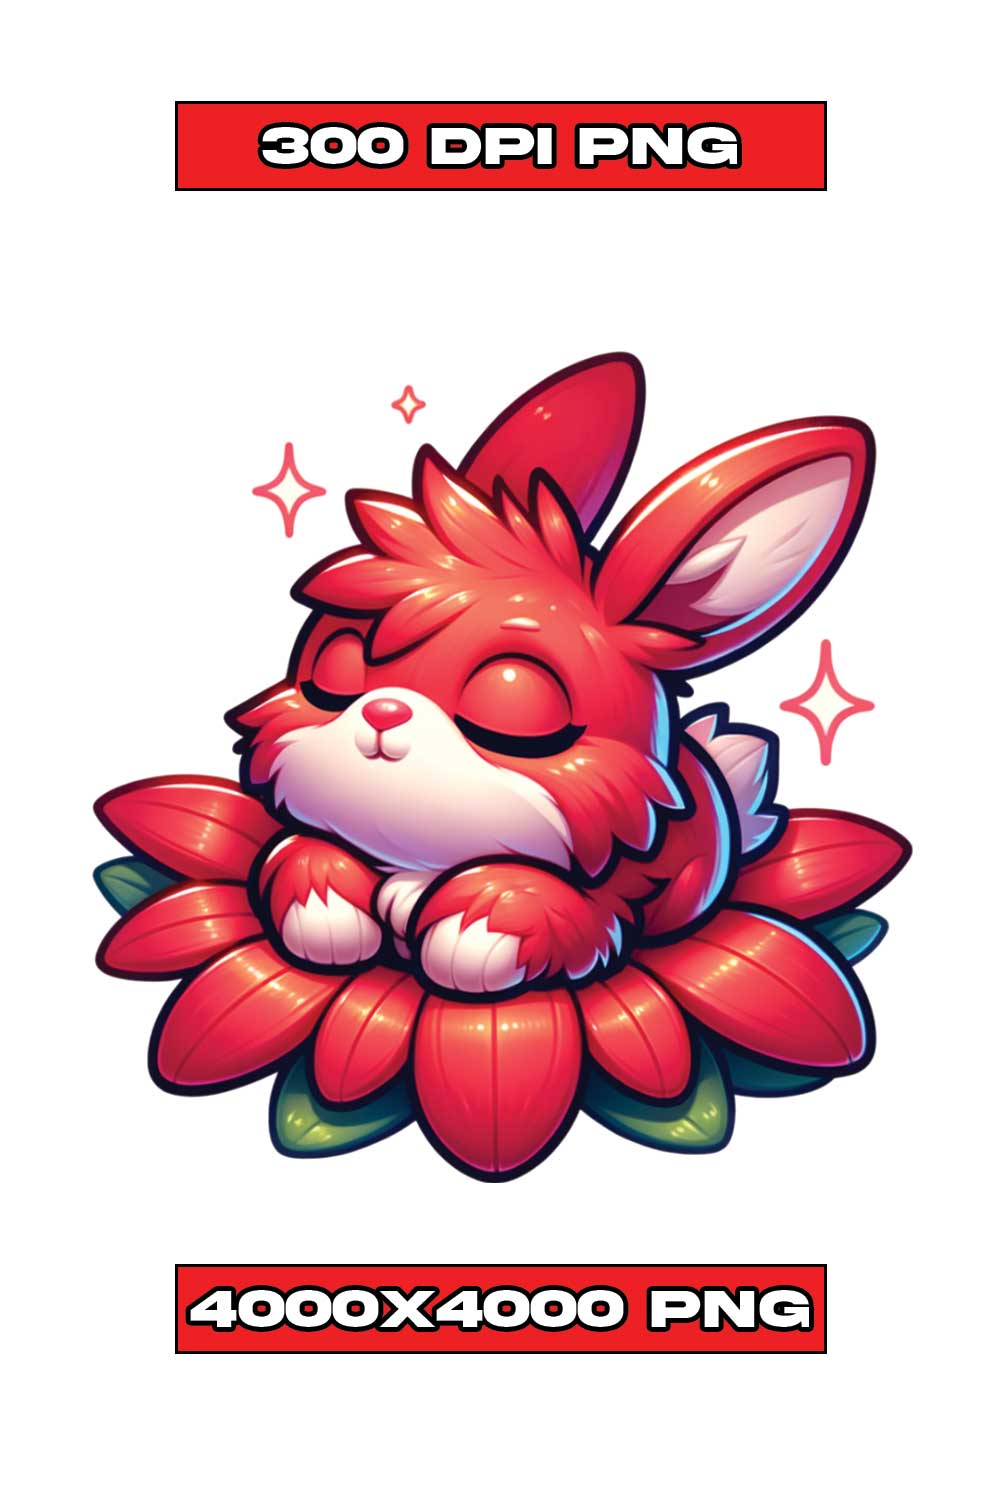 Cute Rabbit resting Sticker pinterest preview image.